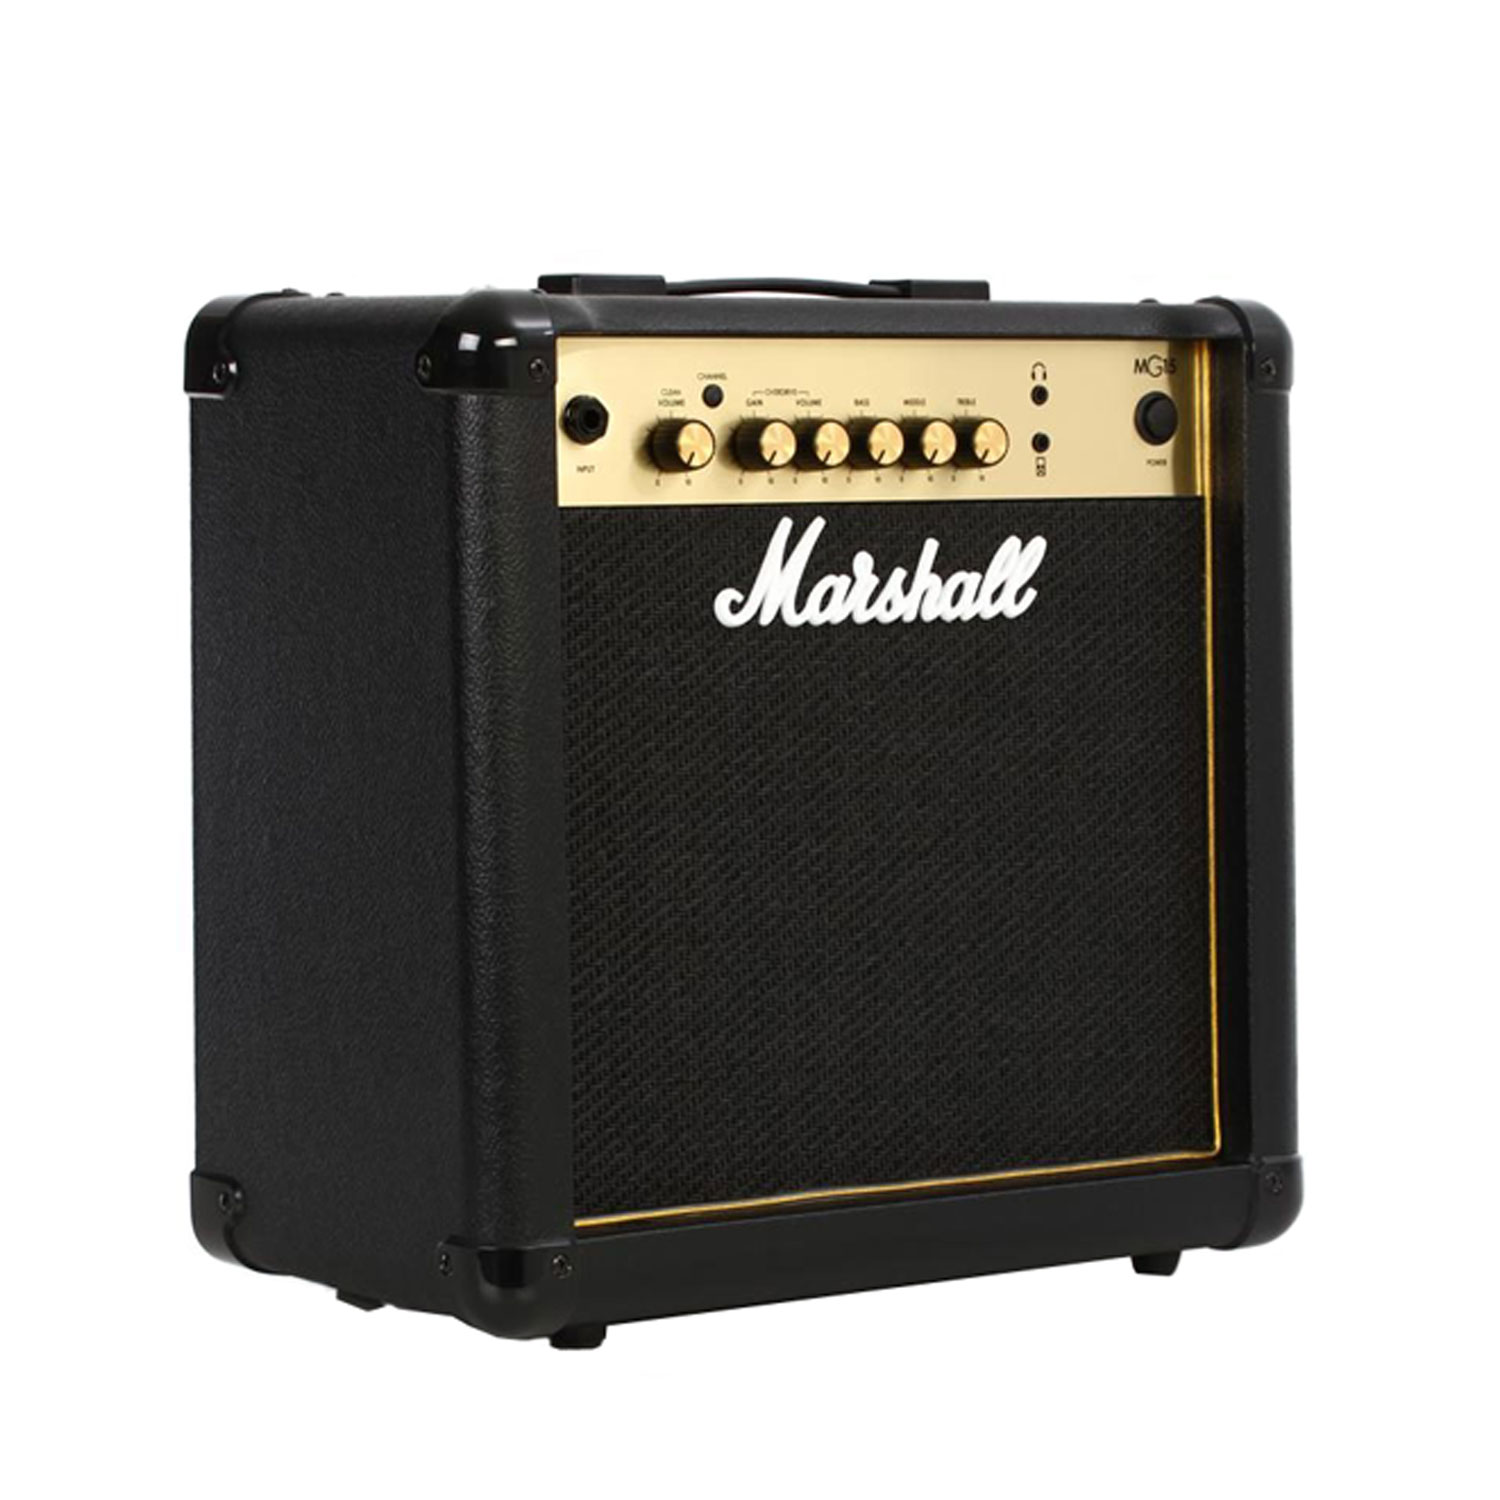 Gia-re-Amply-Marshall-MG15-Gold-Ampli-dan-Guitar-dien-Combo-Amplifier-Tiki